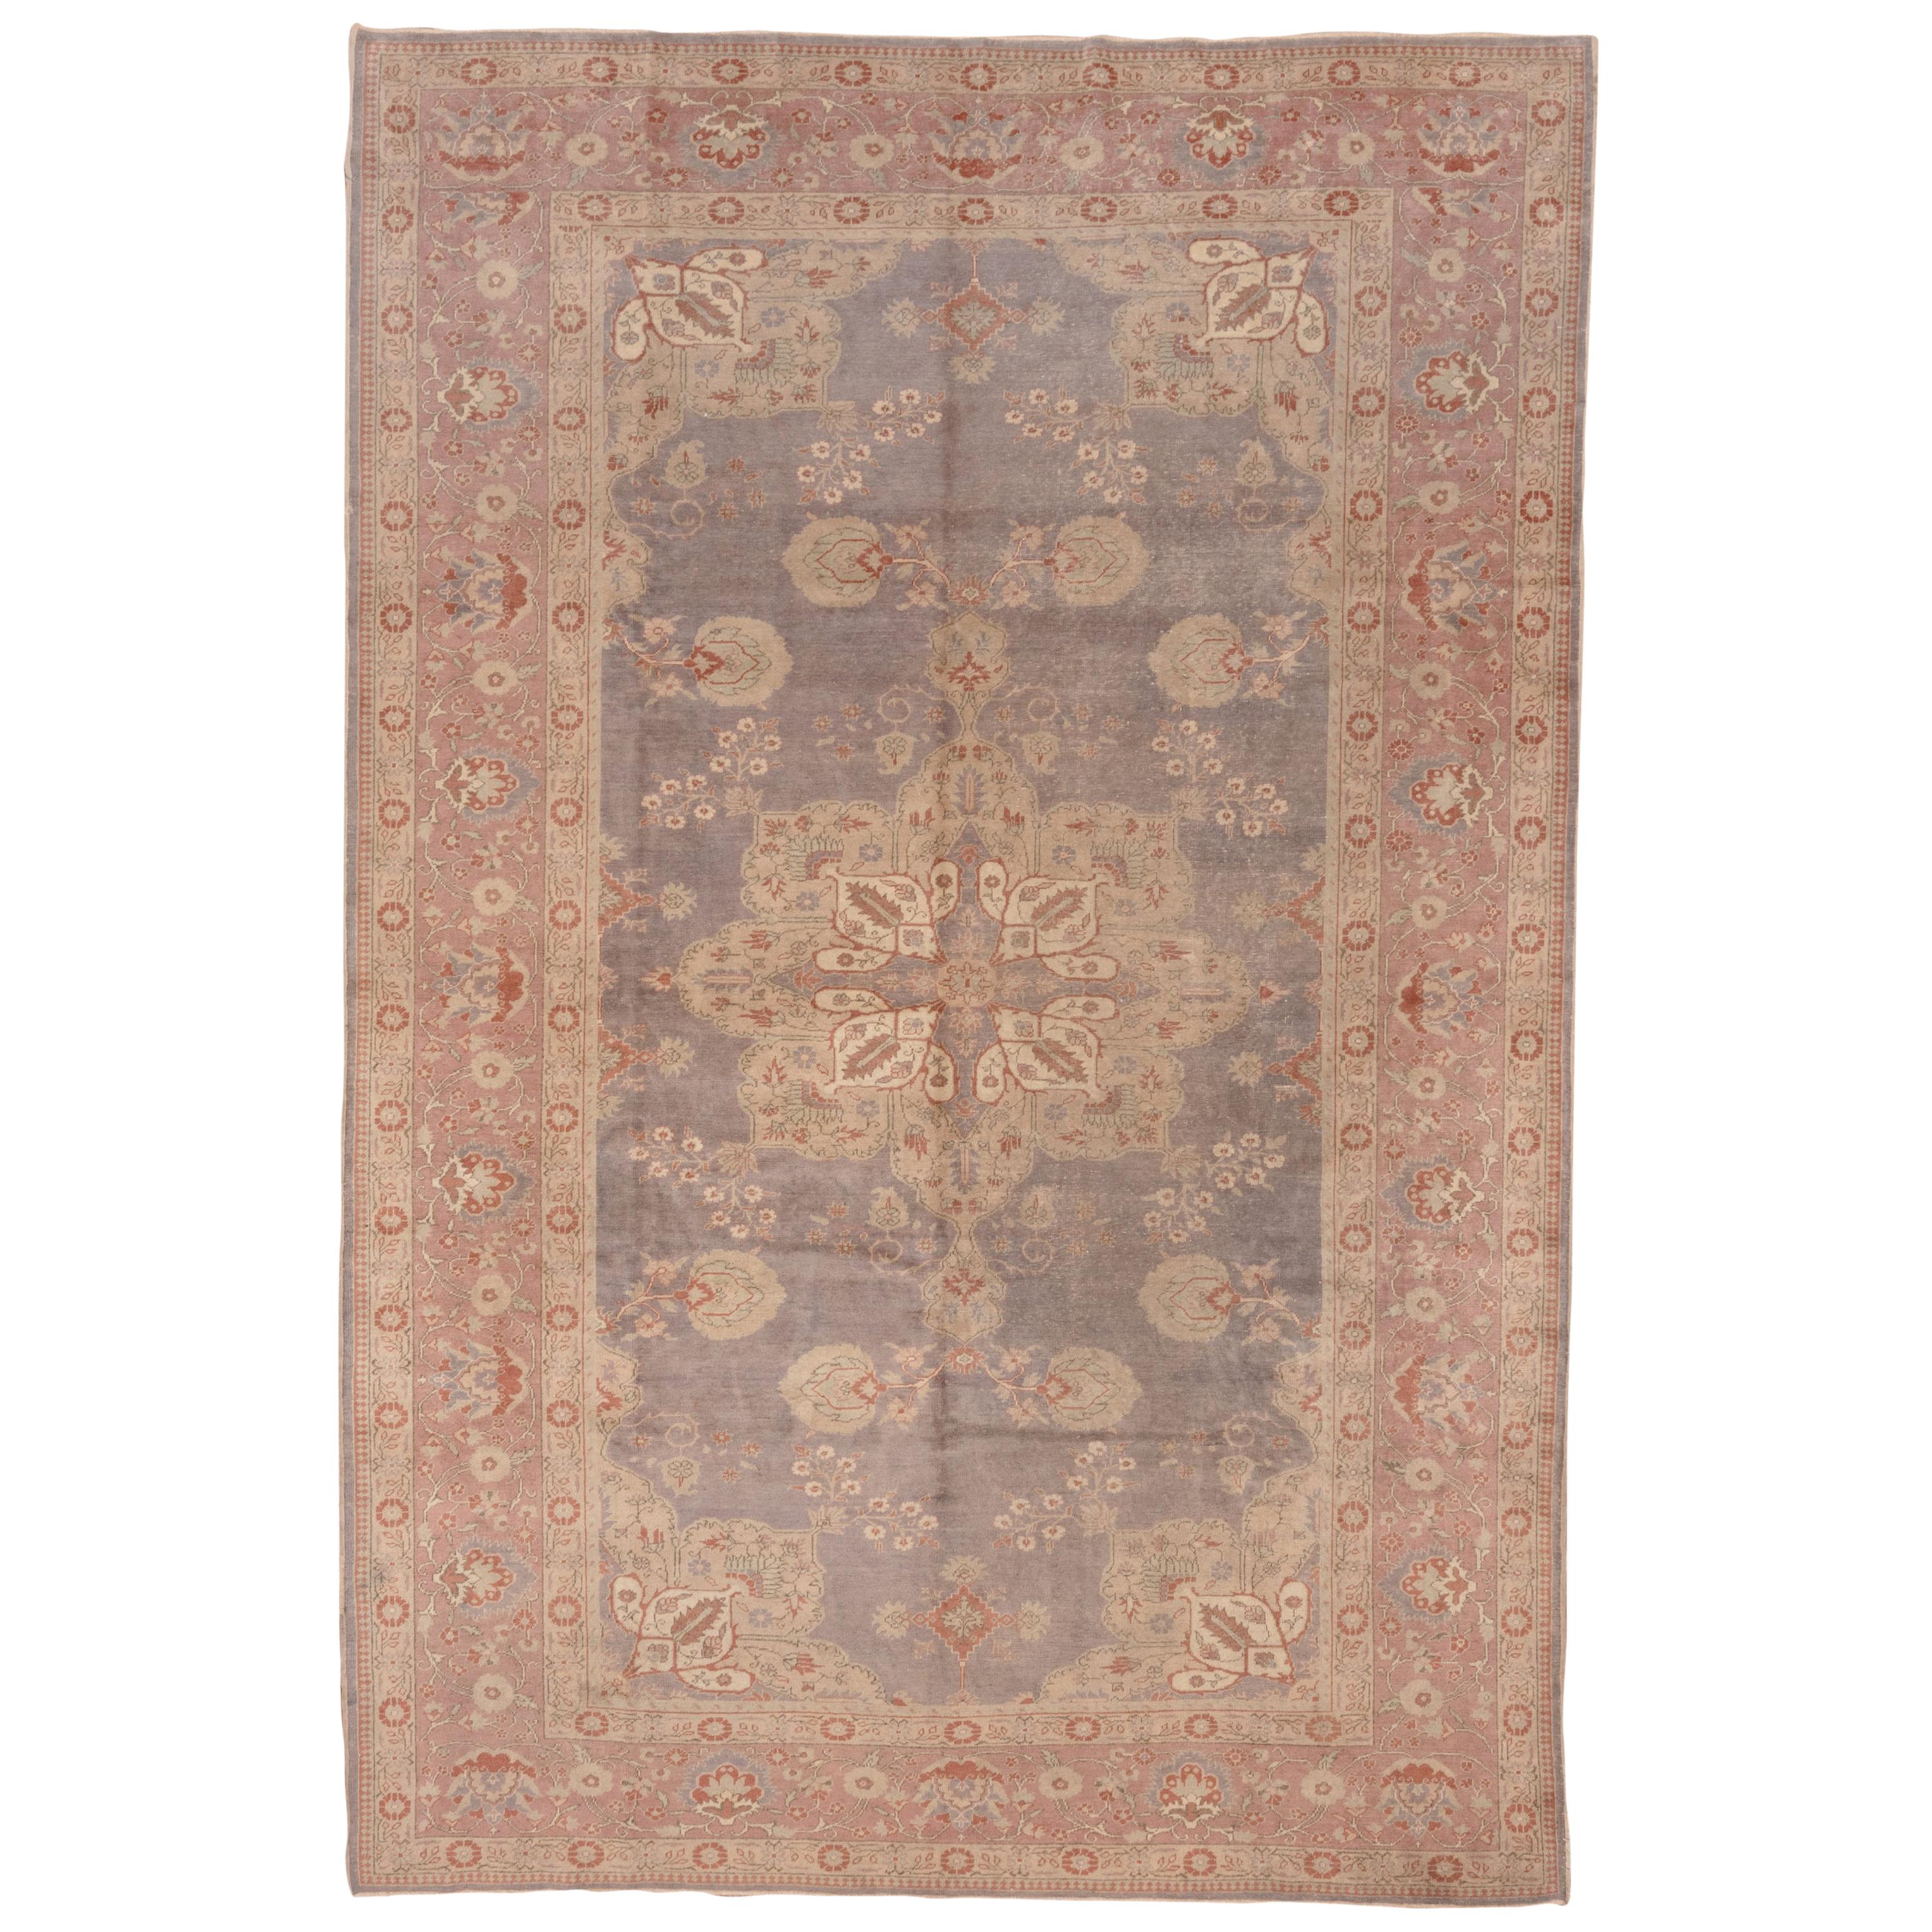 Antique Turkish Oushak Carpet, Gray Field, Pink Borders